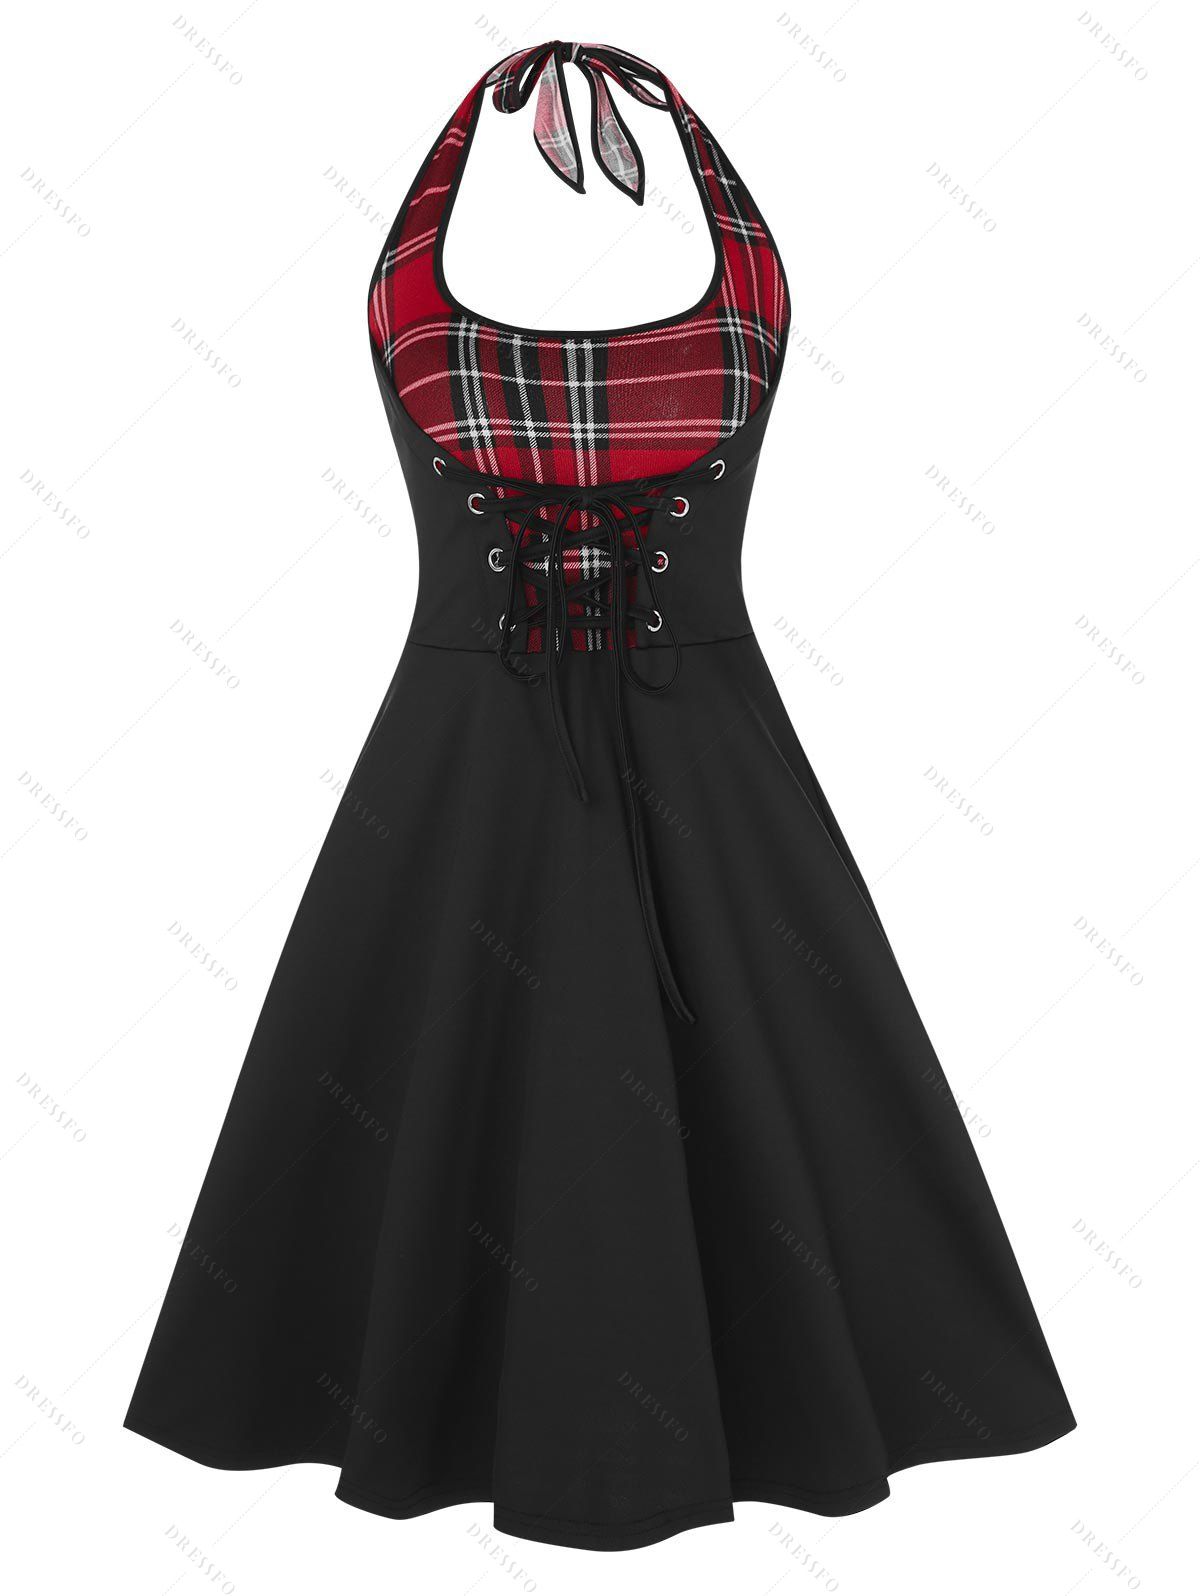 Vintage Halter Lace Up Plaid Pin Up Dress - BLACK L